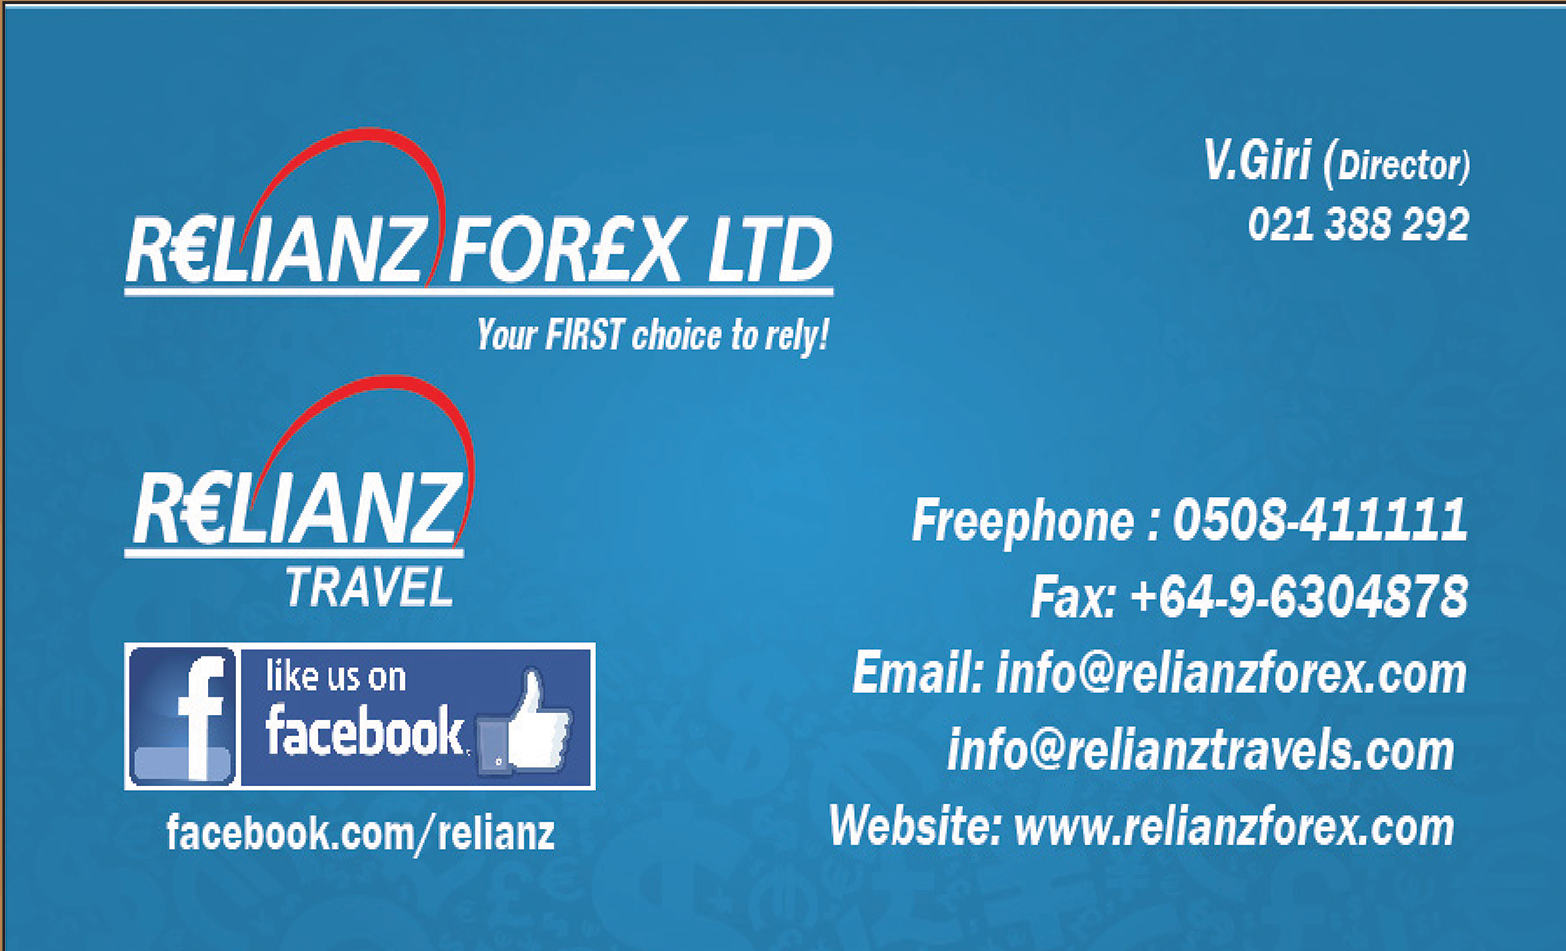 Relianz Forex Limited